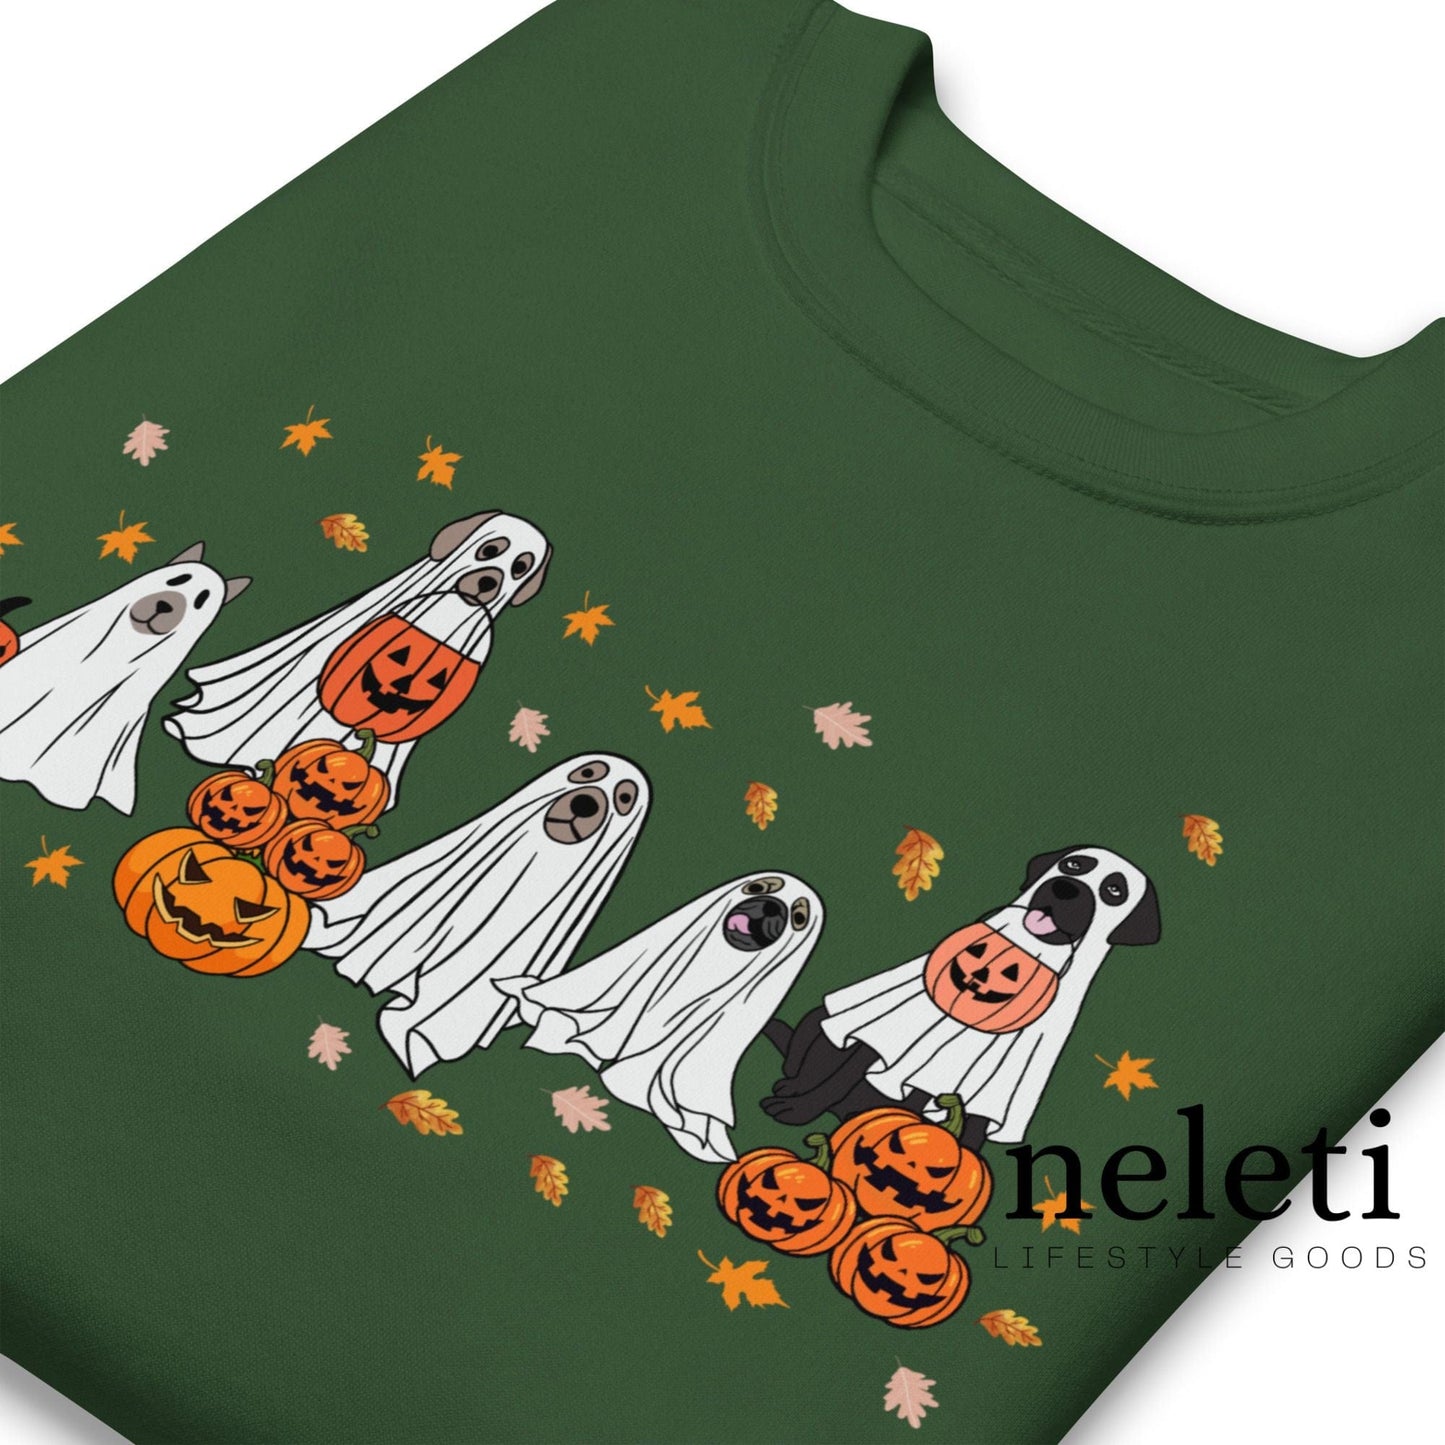 neleti.com-haloween-forest-green-sweatshirt-for-dog-lovers